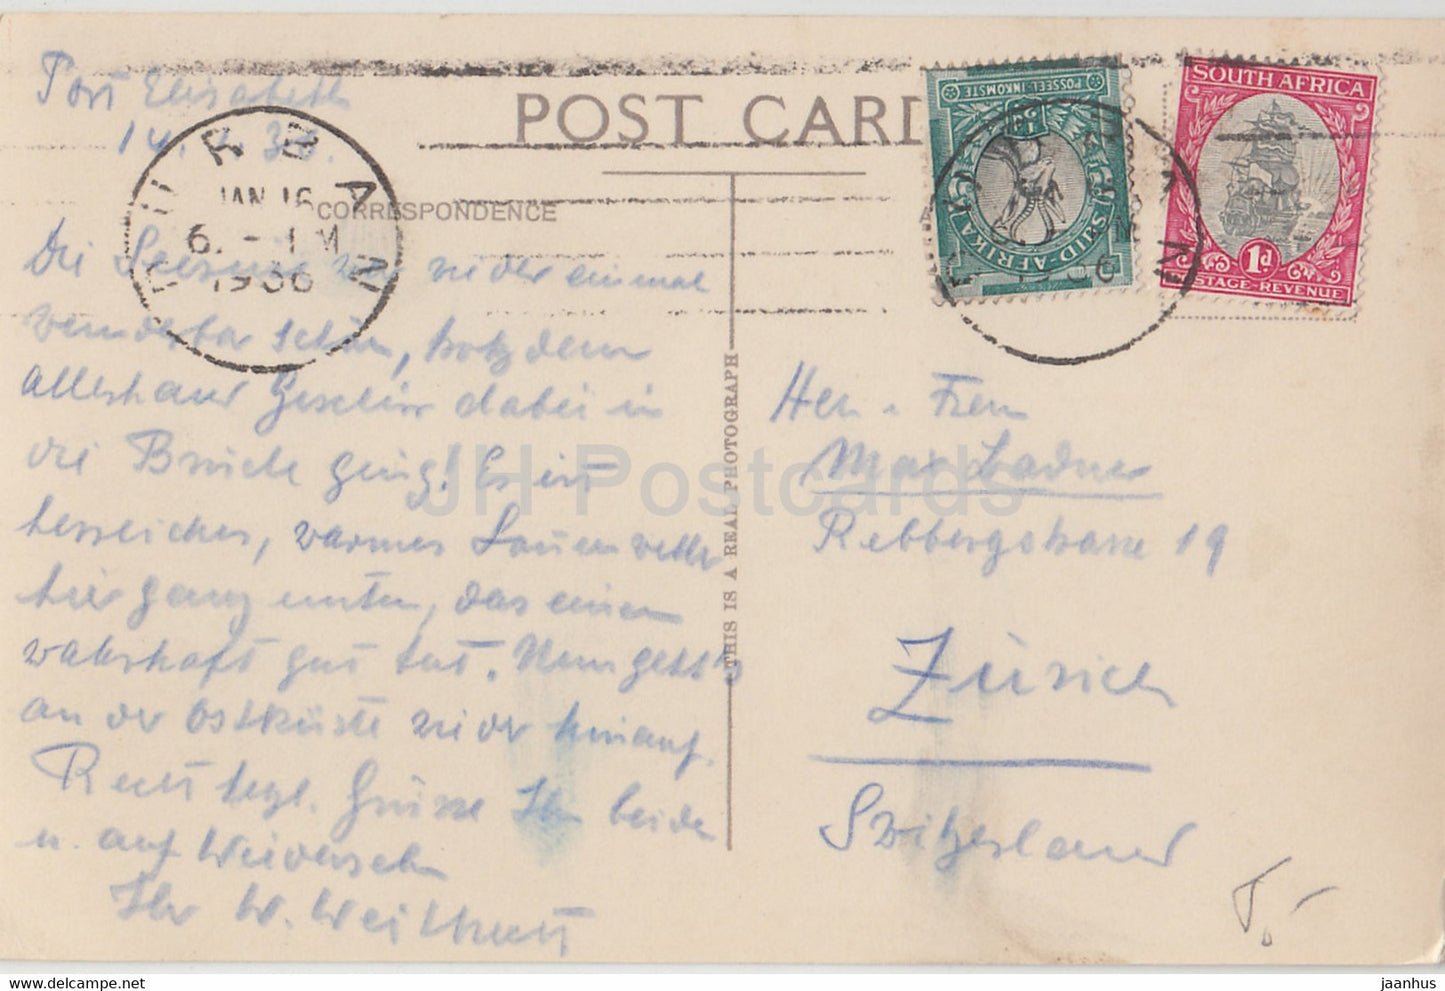 Port Elizabeth - The Union's Snake Park - old postcard - 1936 - South Africa - used